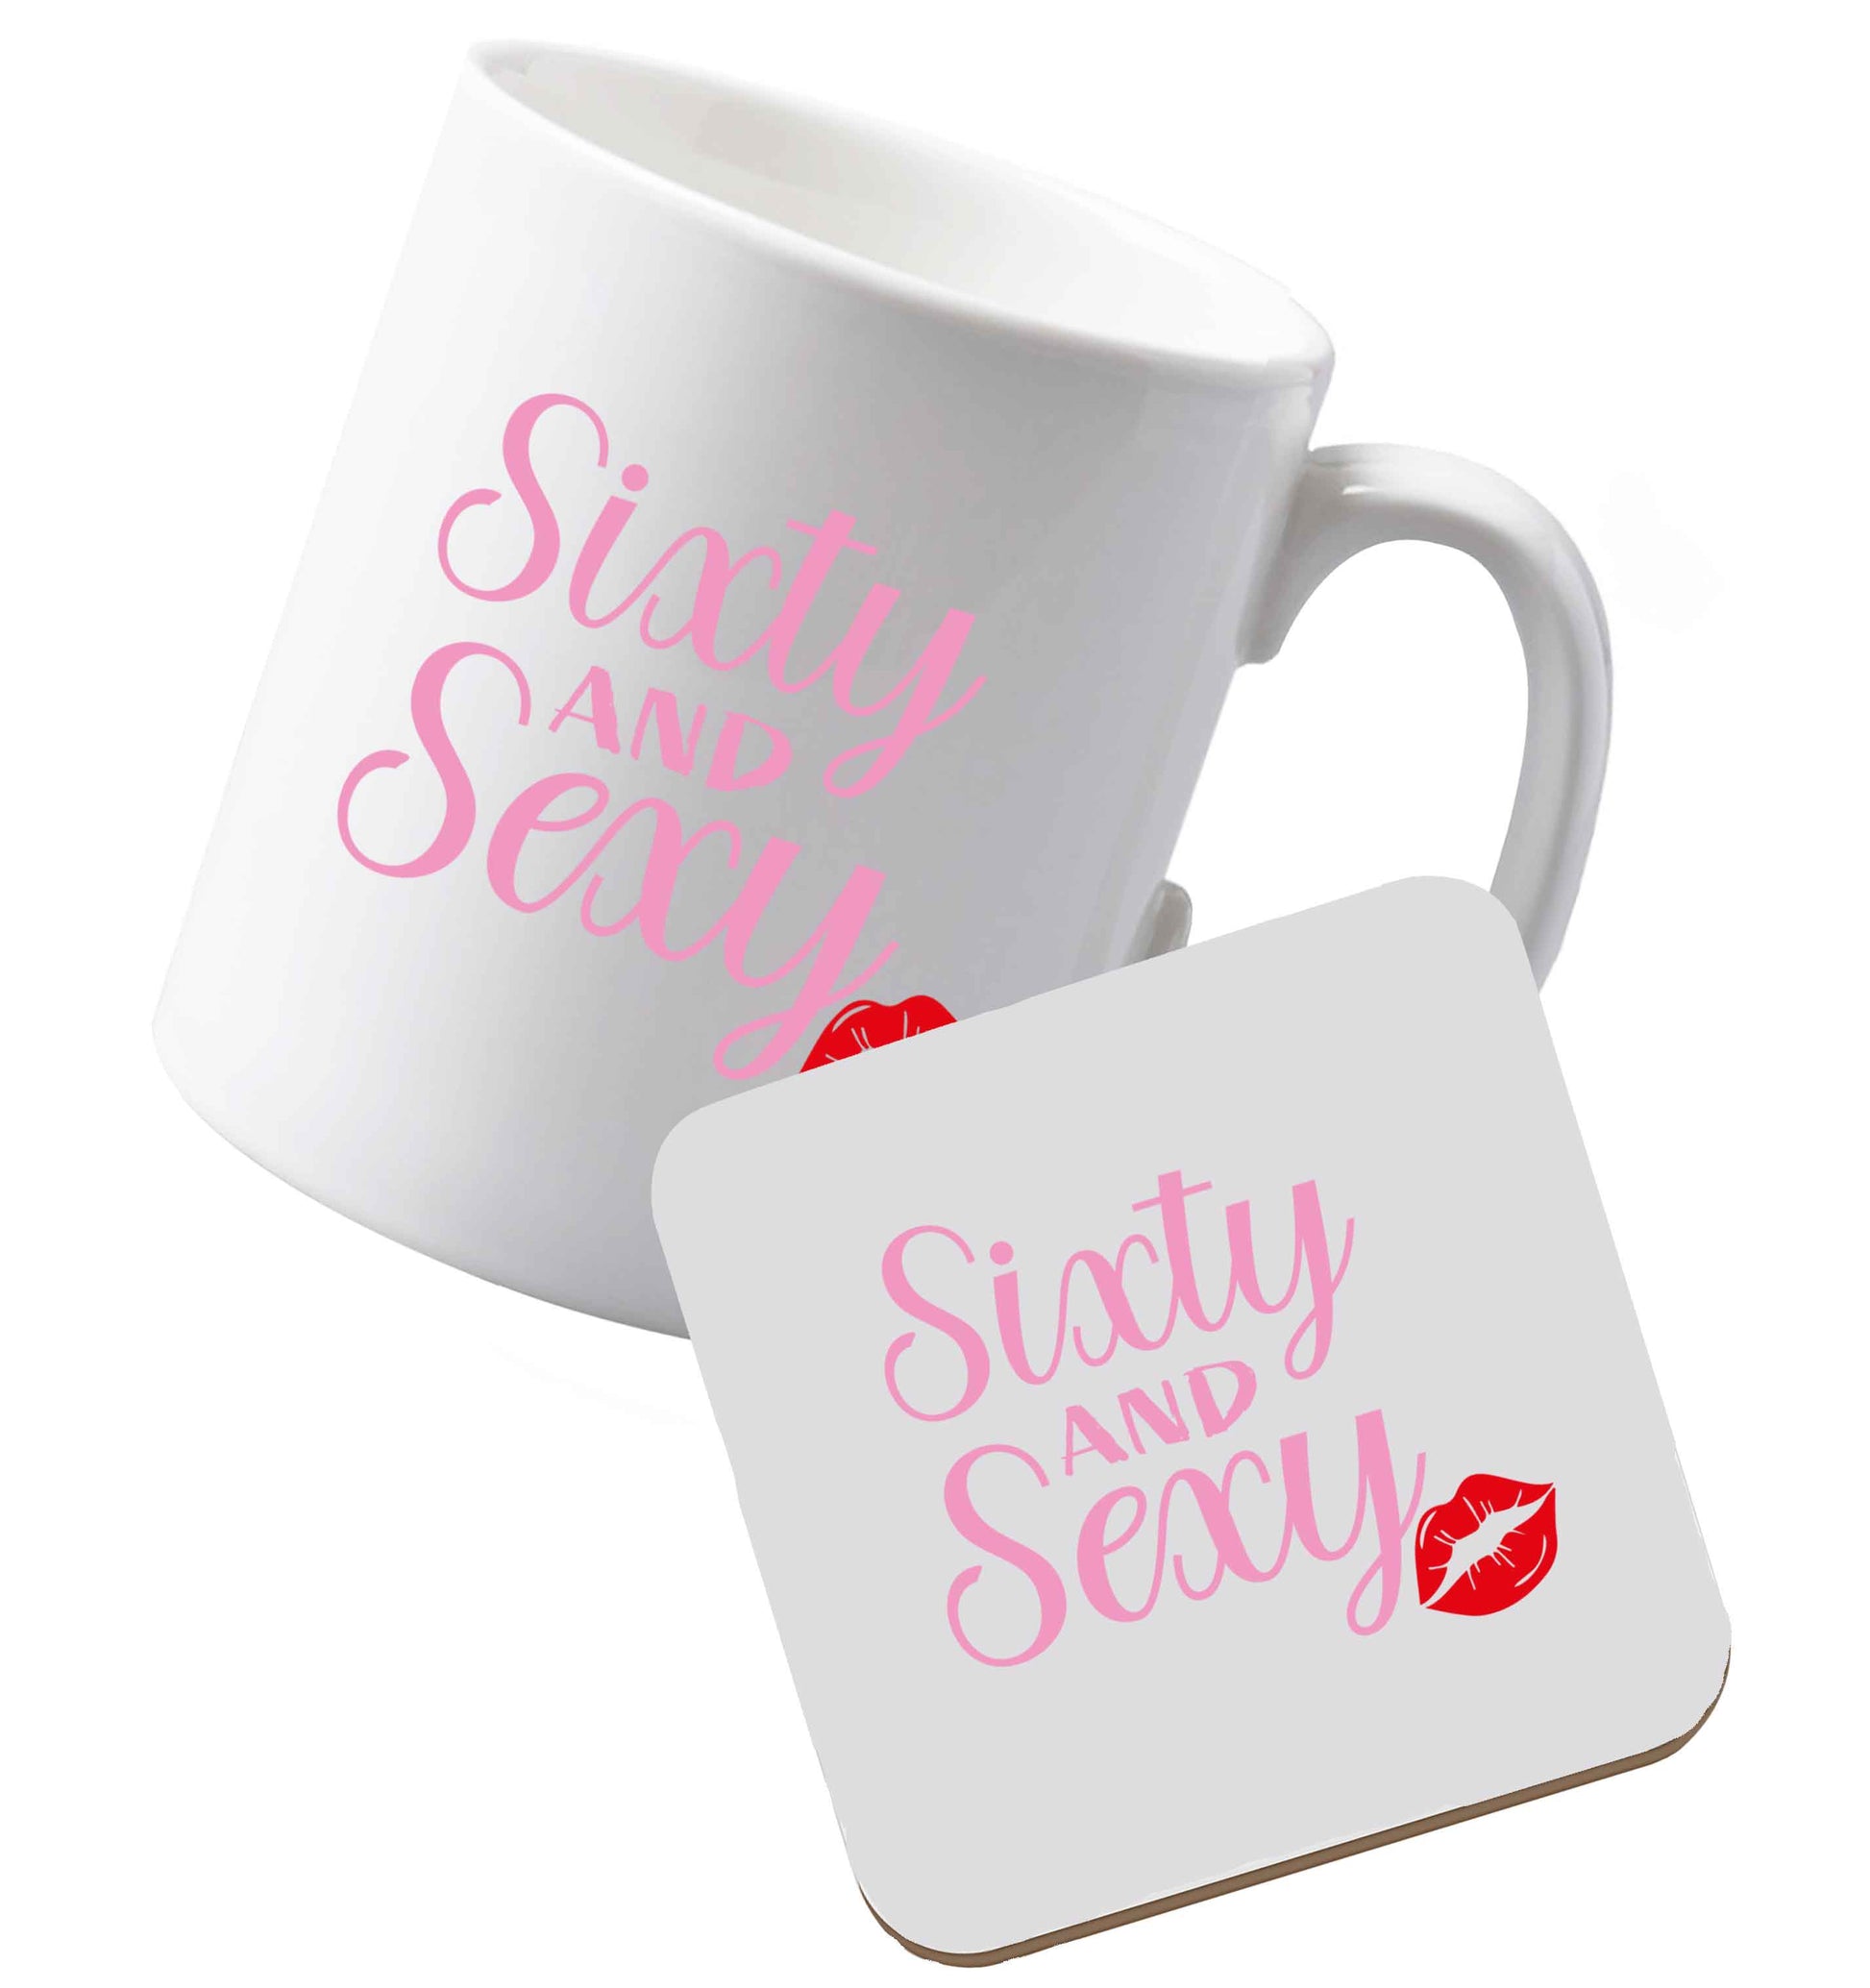 10 oz Ceramic mug and coaster Sixty and sexy both sides